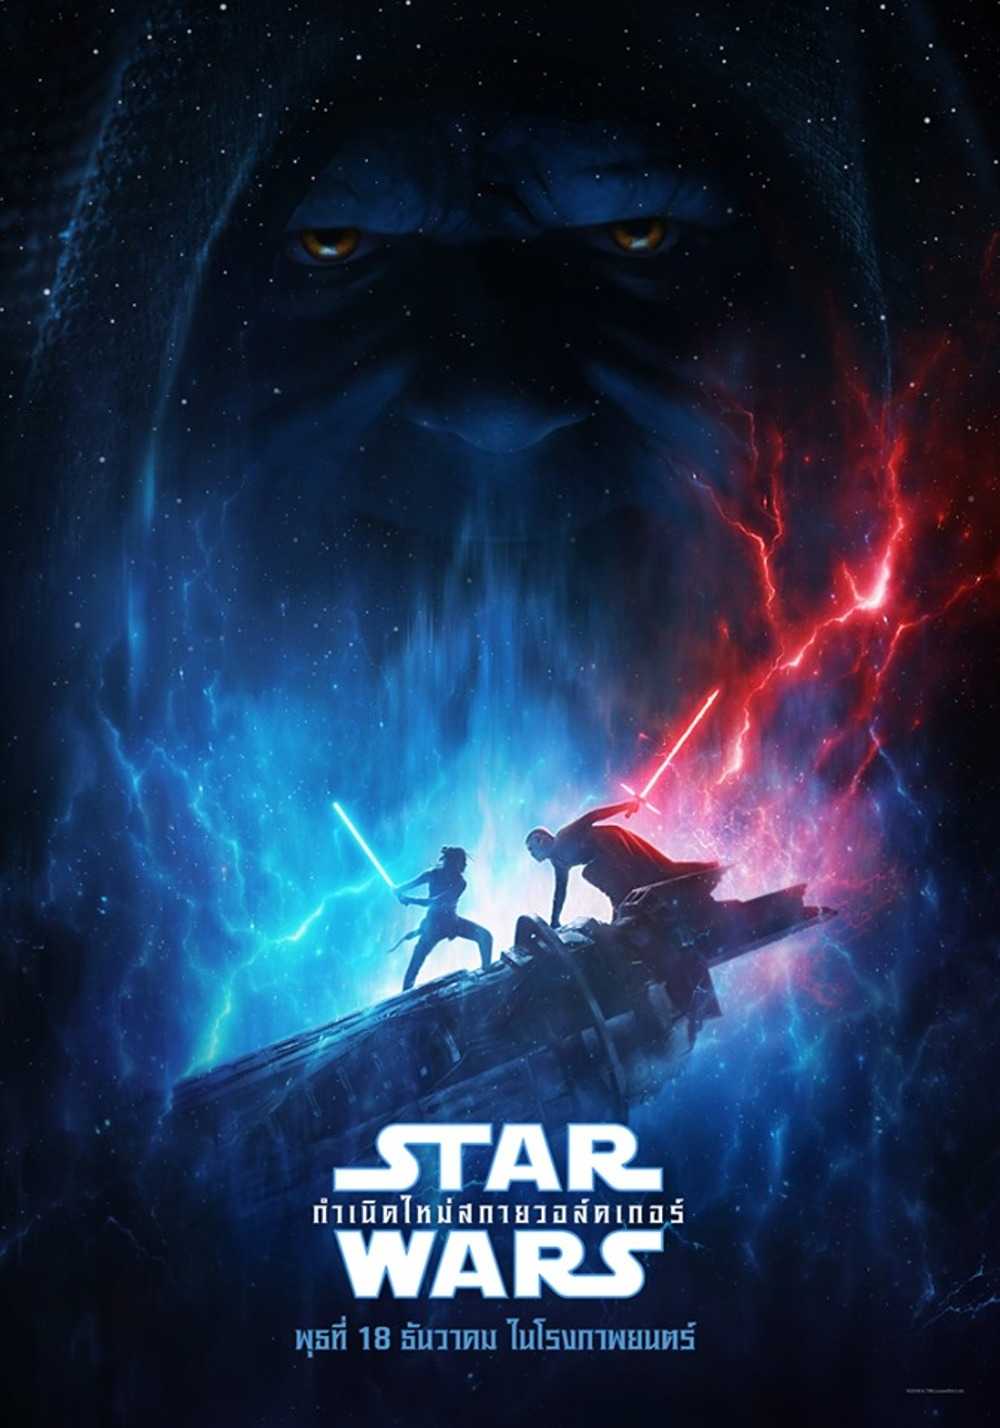 Star Wars 9 The Rise of Skywalker (2019) สตาร์ วอร์ส - ดูหนังออนไลน